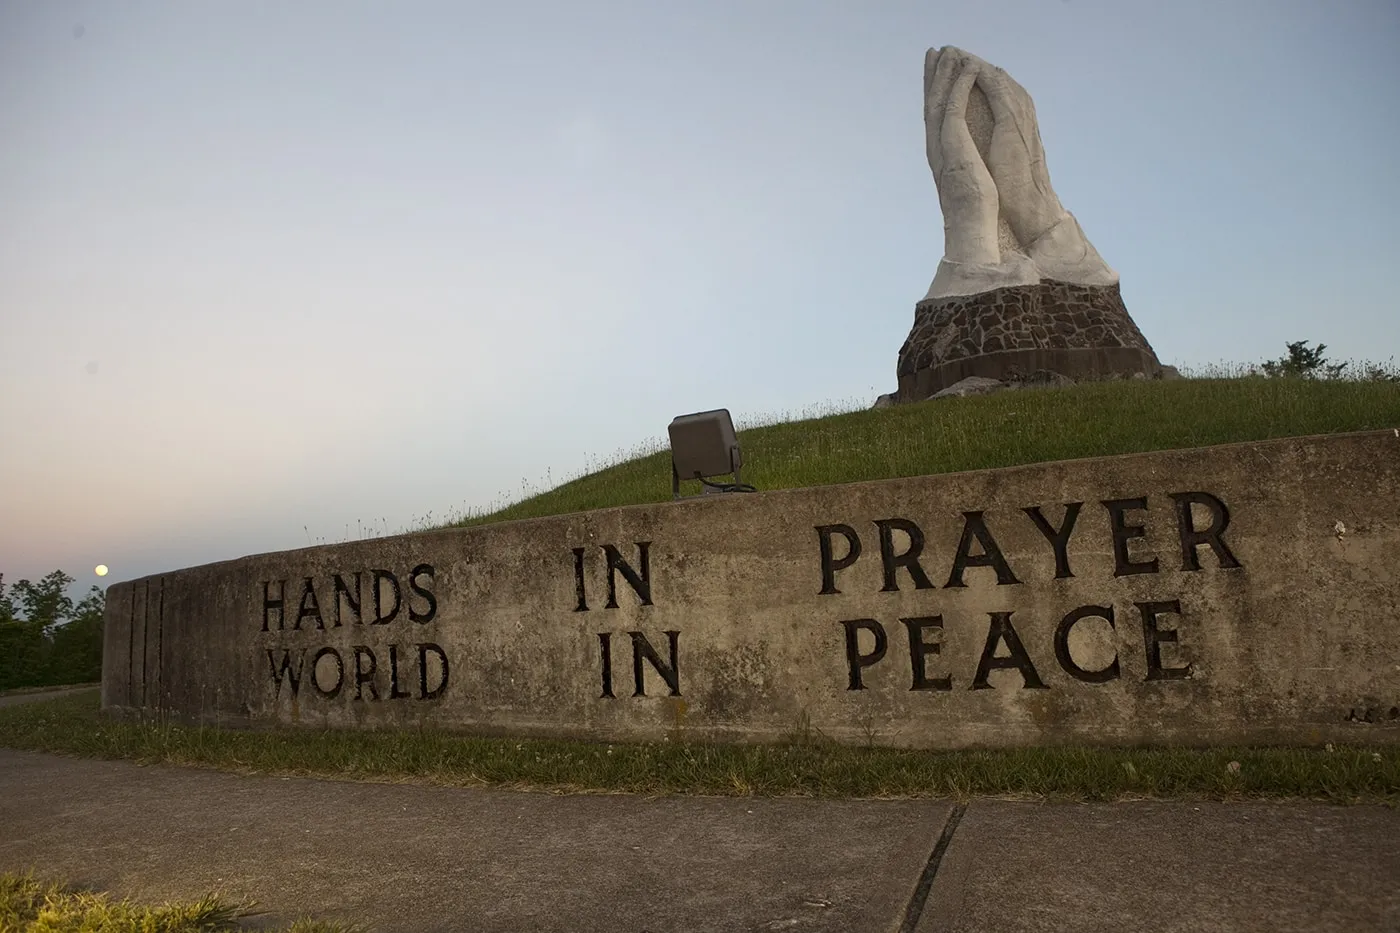 Giant Praying Hands in Webb City, Missouri